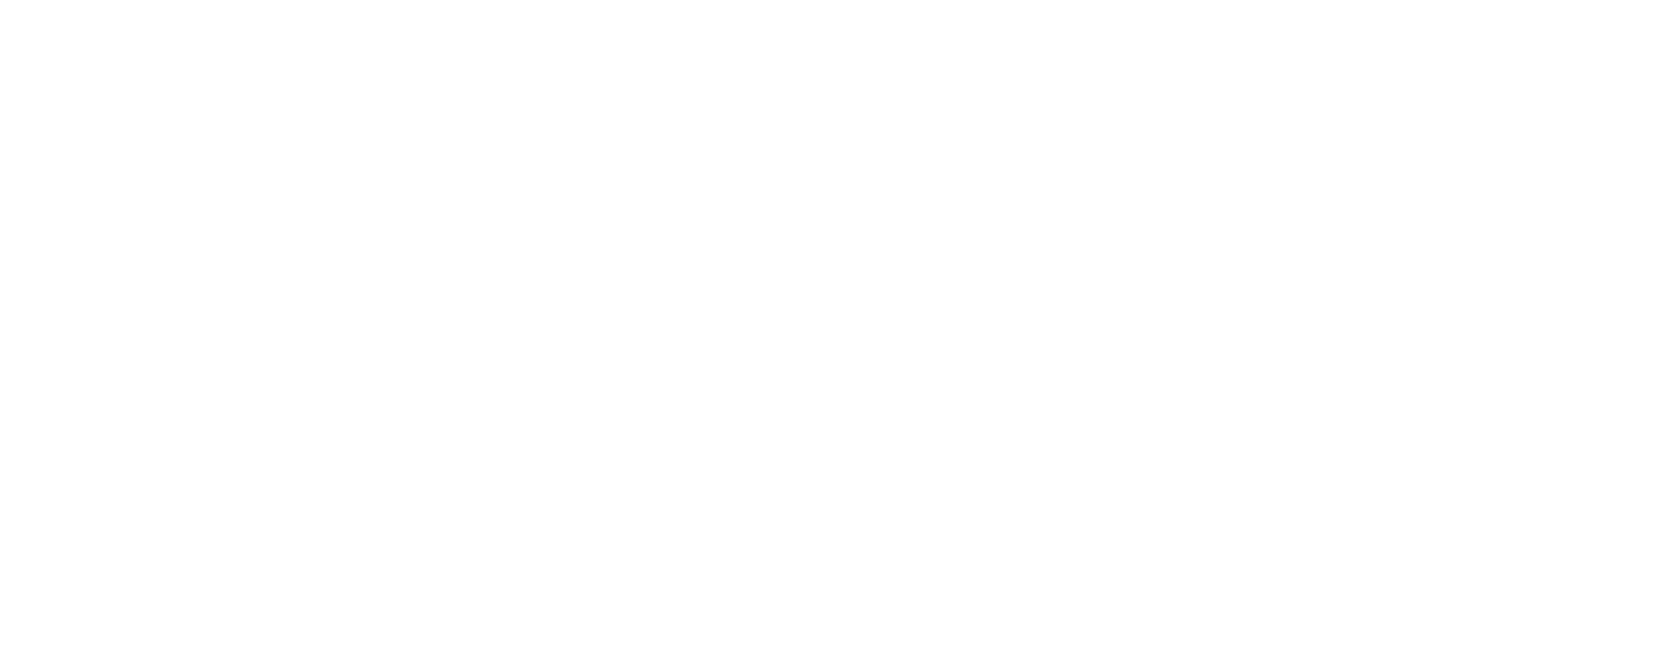 Island Ink Creative Co.